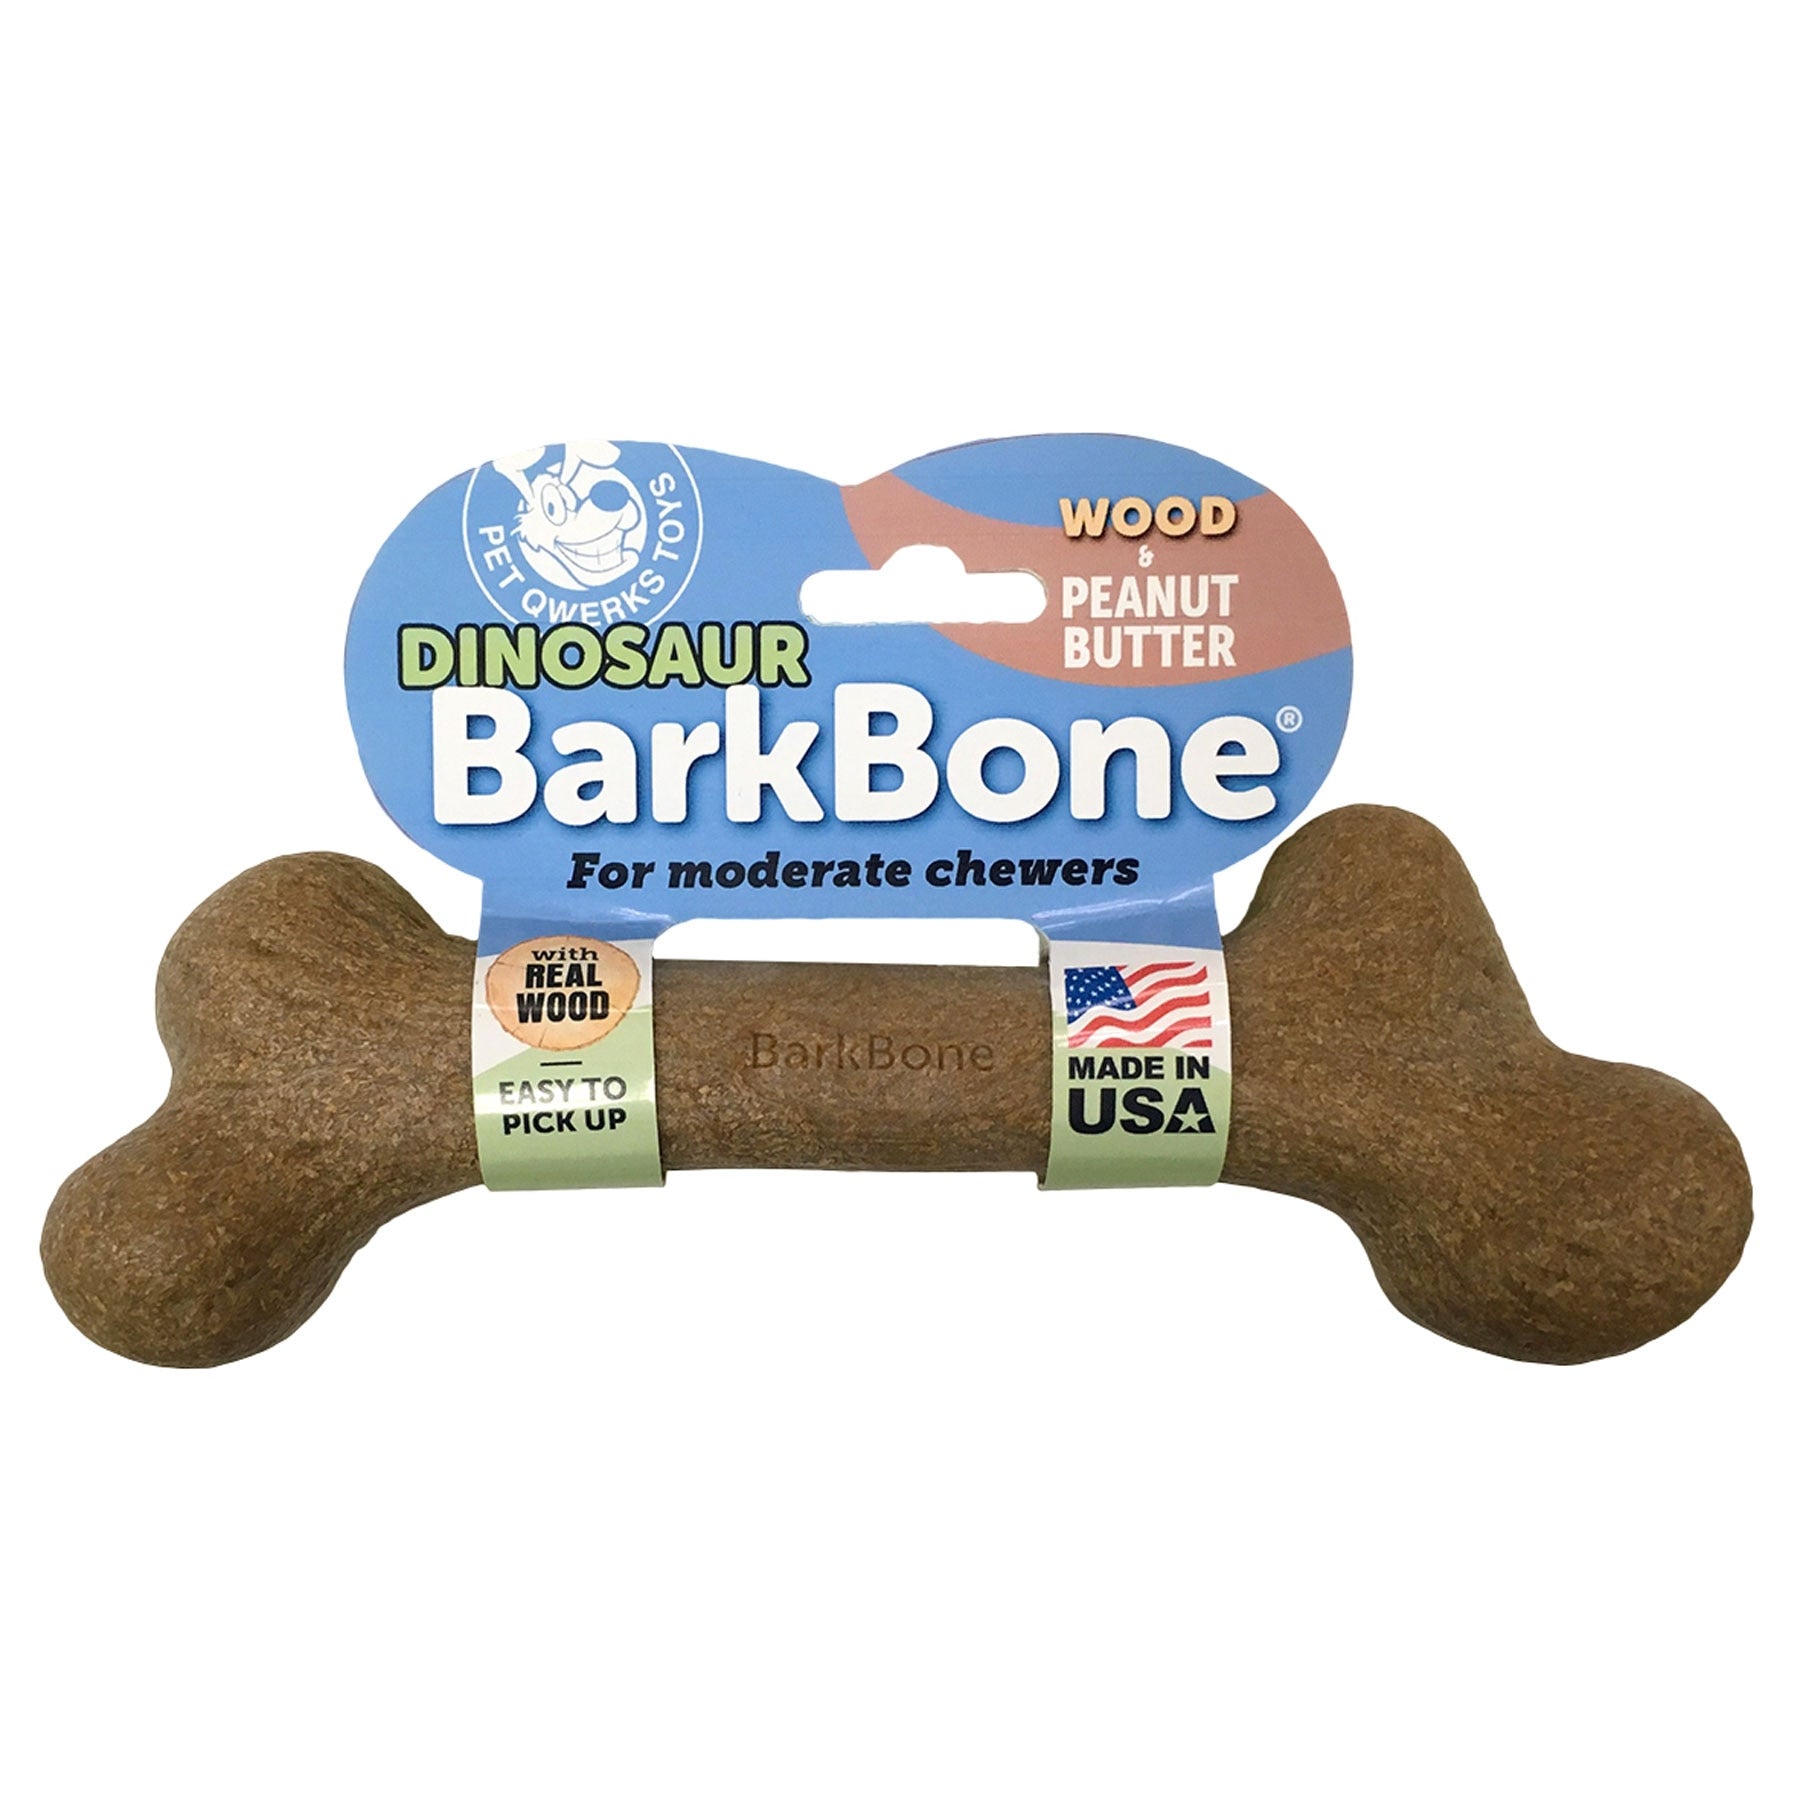 Pet Qwerks Peanut Butter Wood Dinosaur BarkBone Dog Chew